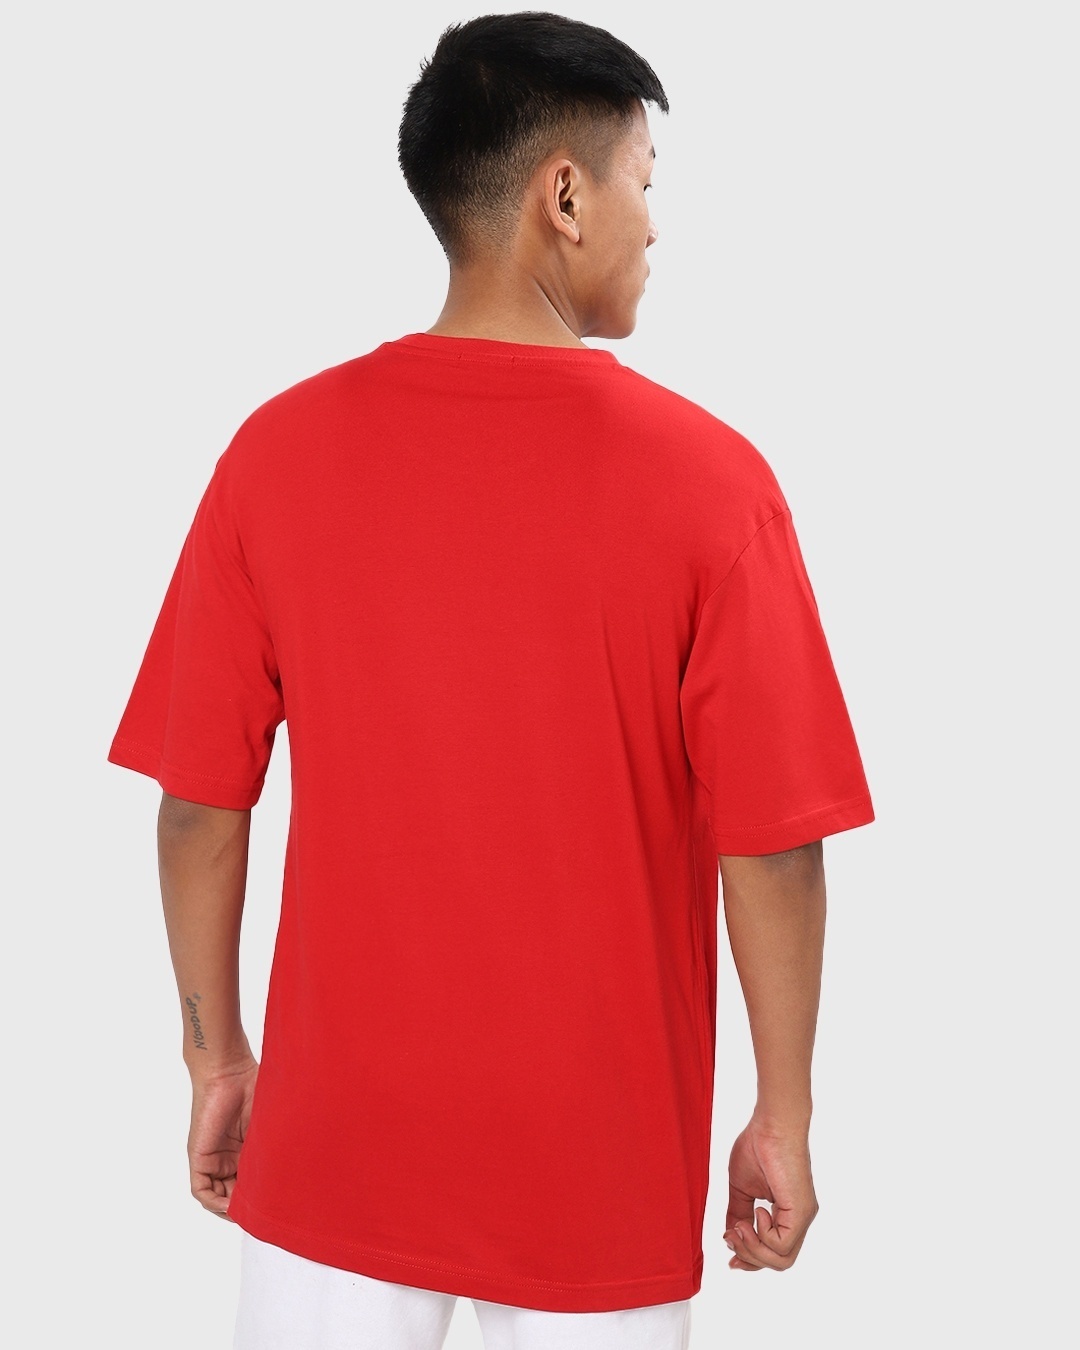 Shop Men's Black & Red Oversized Combo T-shirt (Pack of 2)-Design